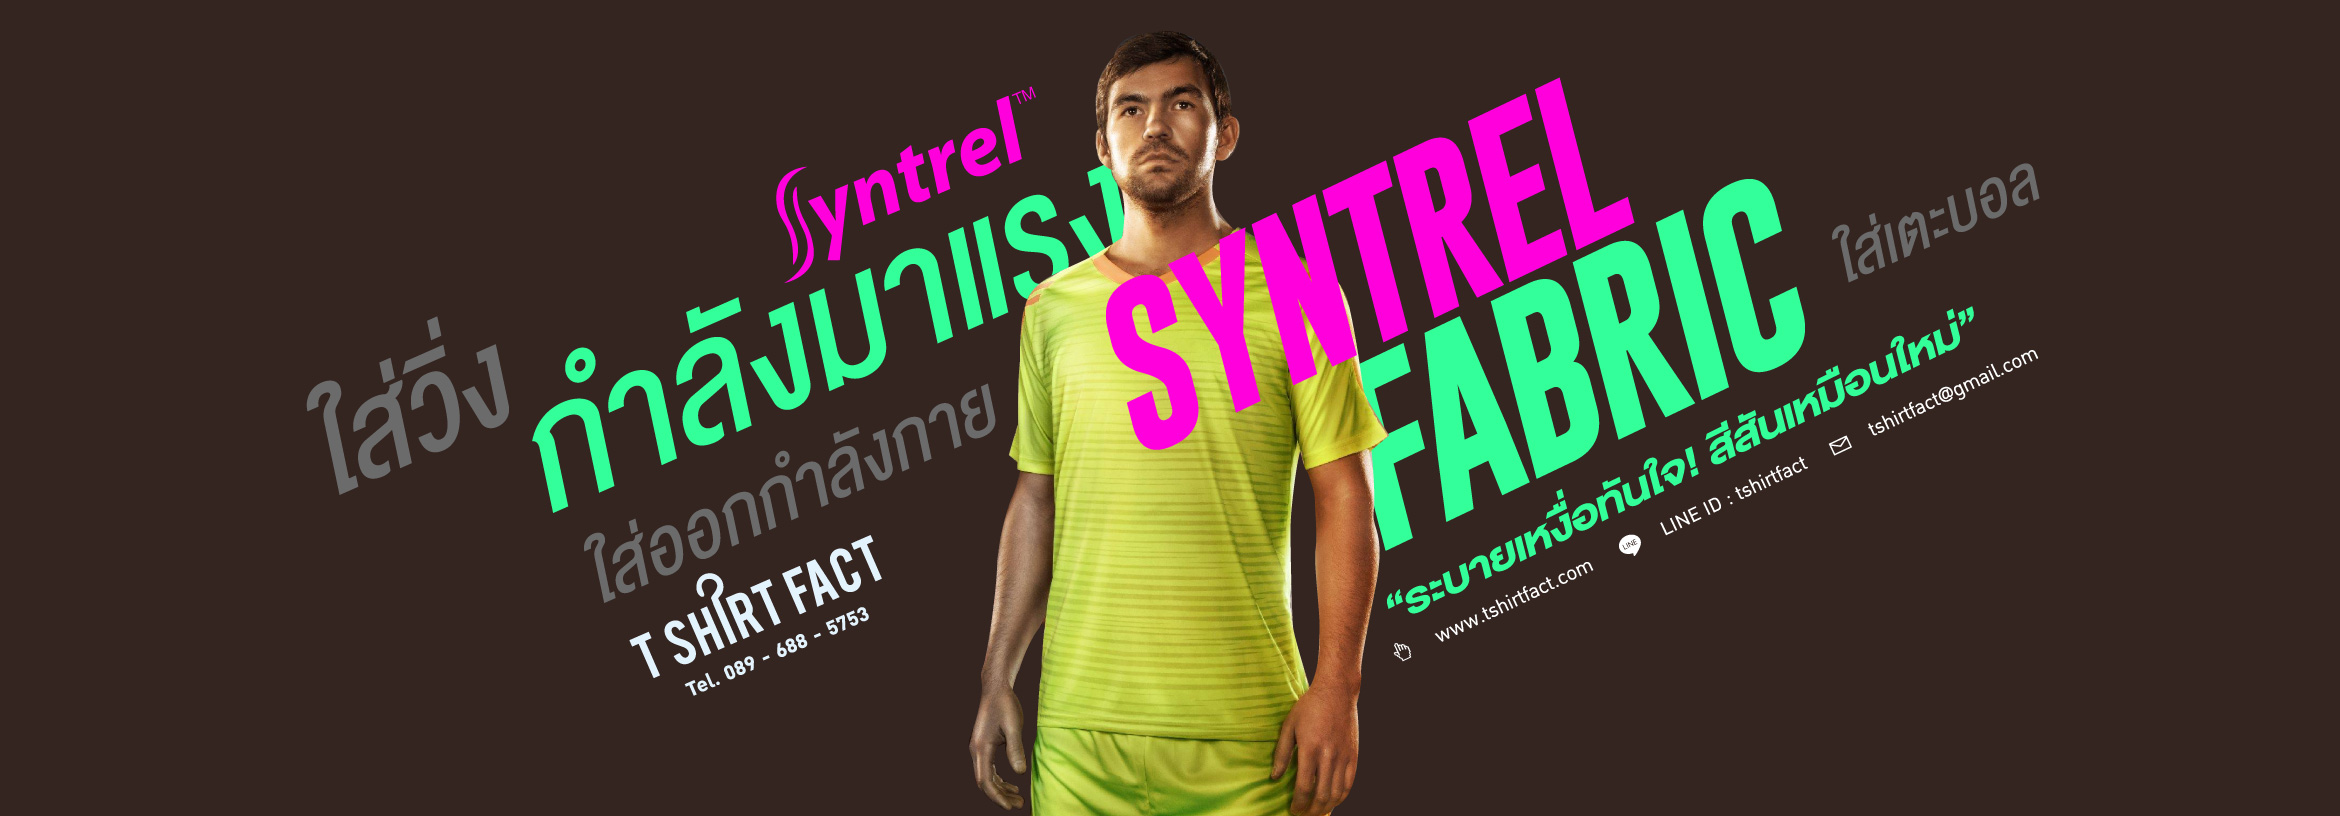 TSF-banner_Syntrel